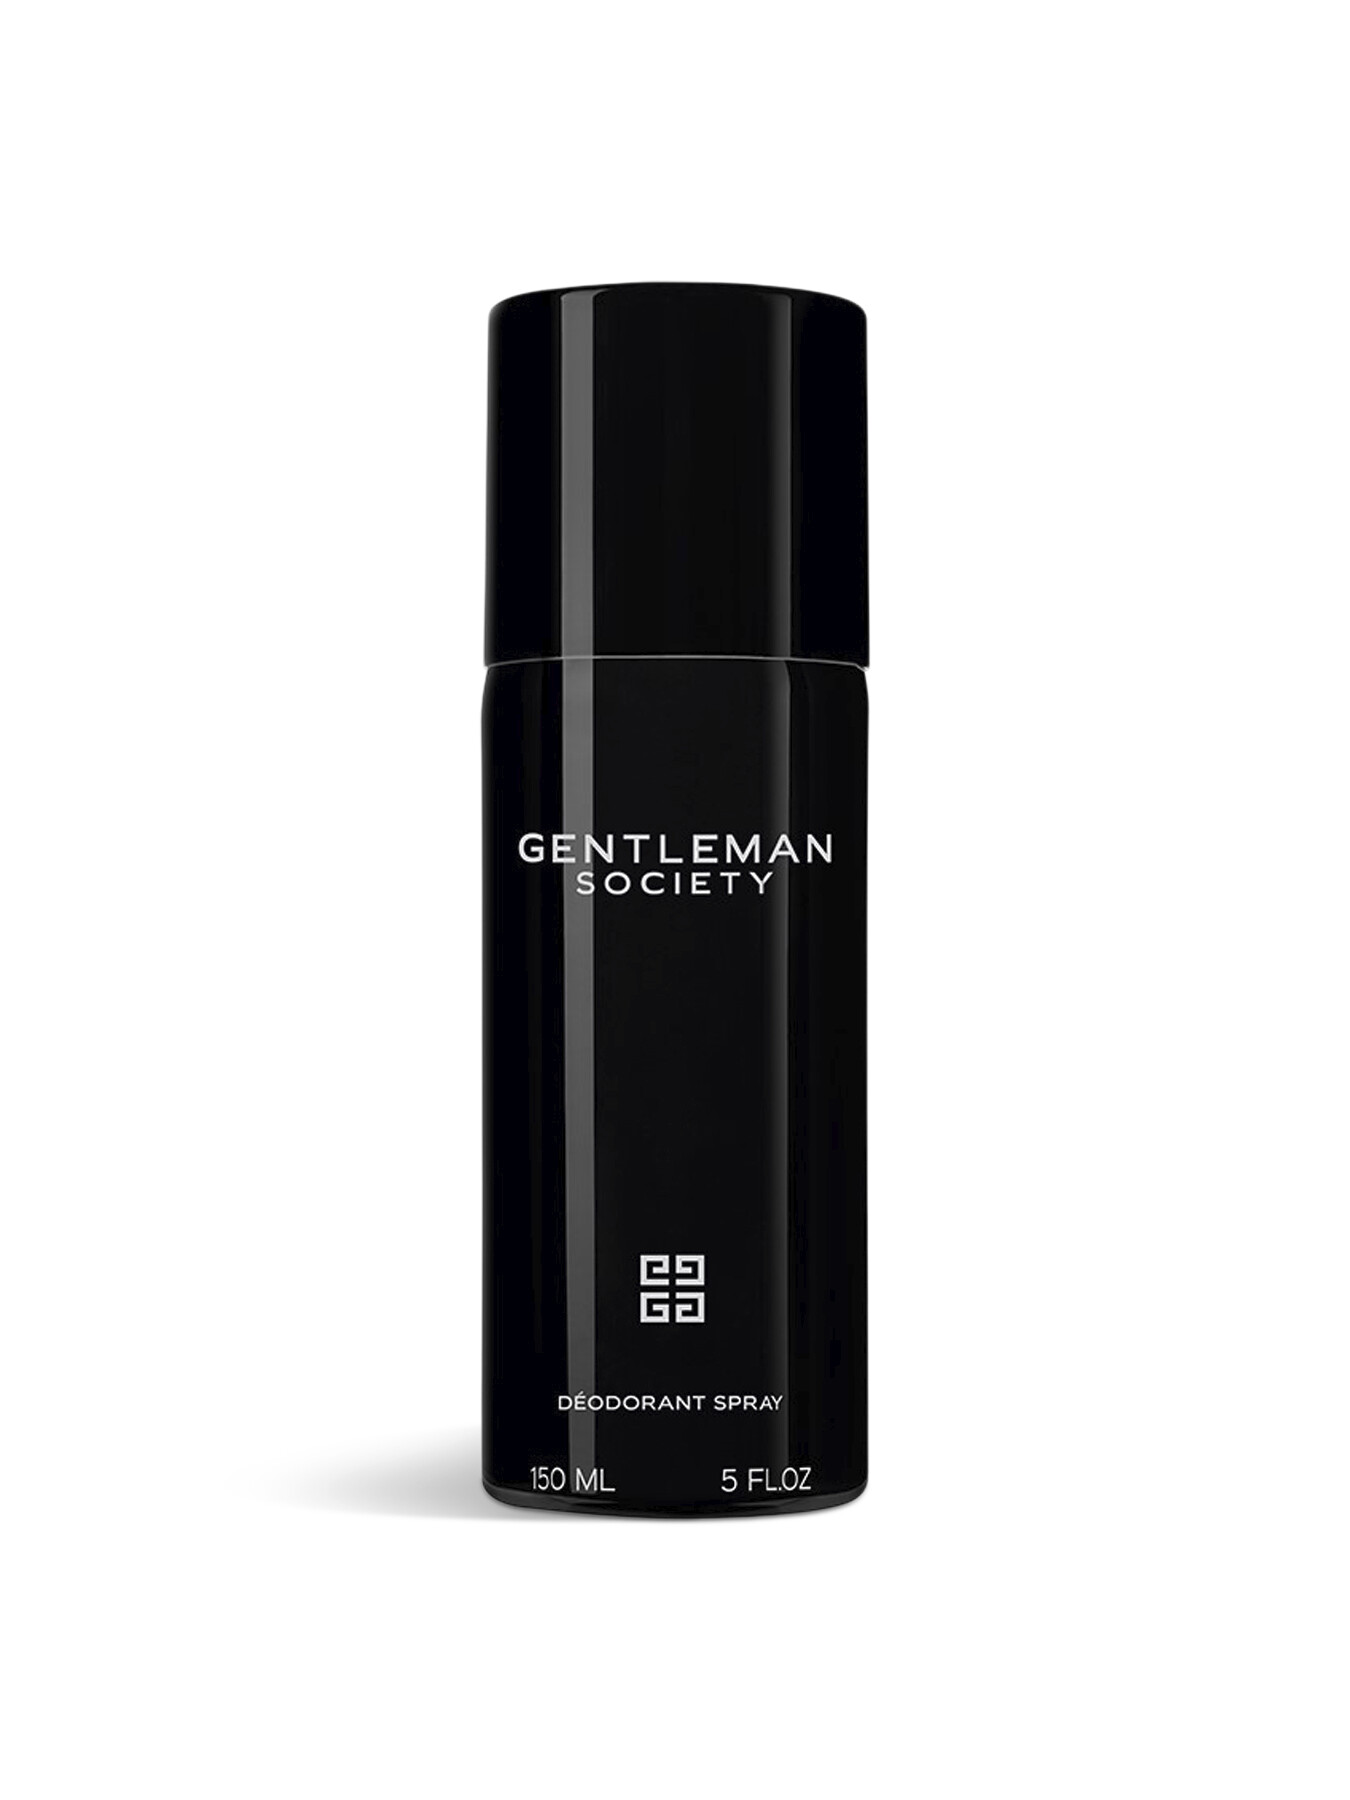 Givenchy Gentleman 23 Eau De Parfum Deodorant Spray 150ml In White